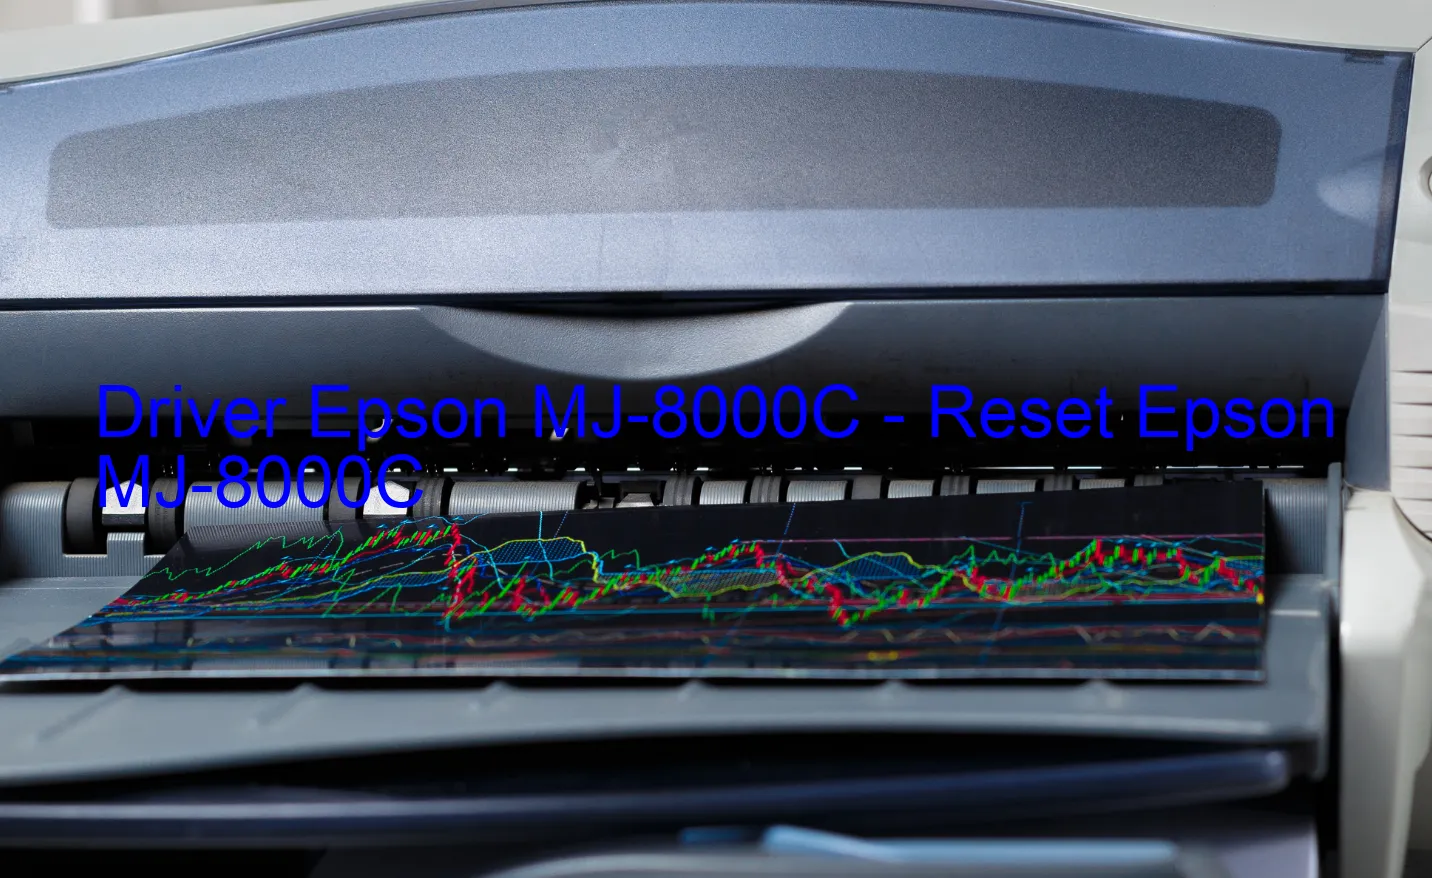 Epson MJ-8000Cのドライバー、Epson MJ-8000Cのリセットソフトウェア